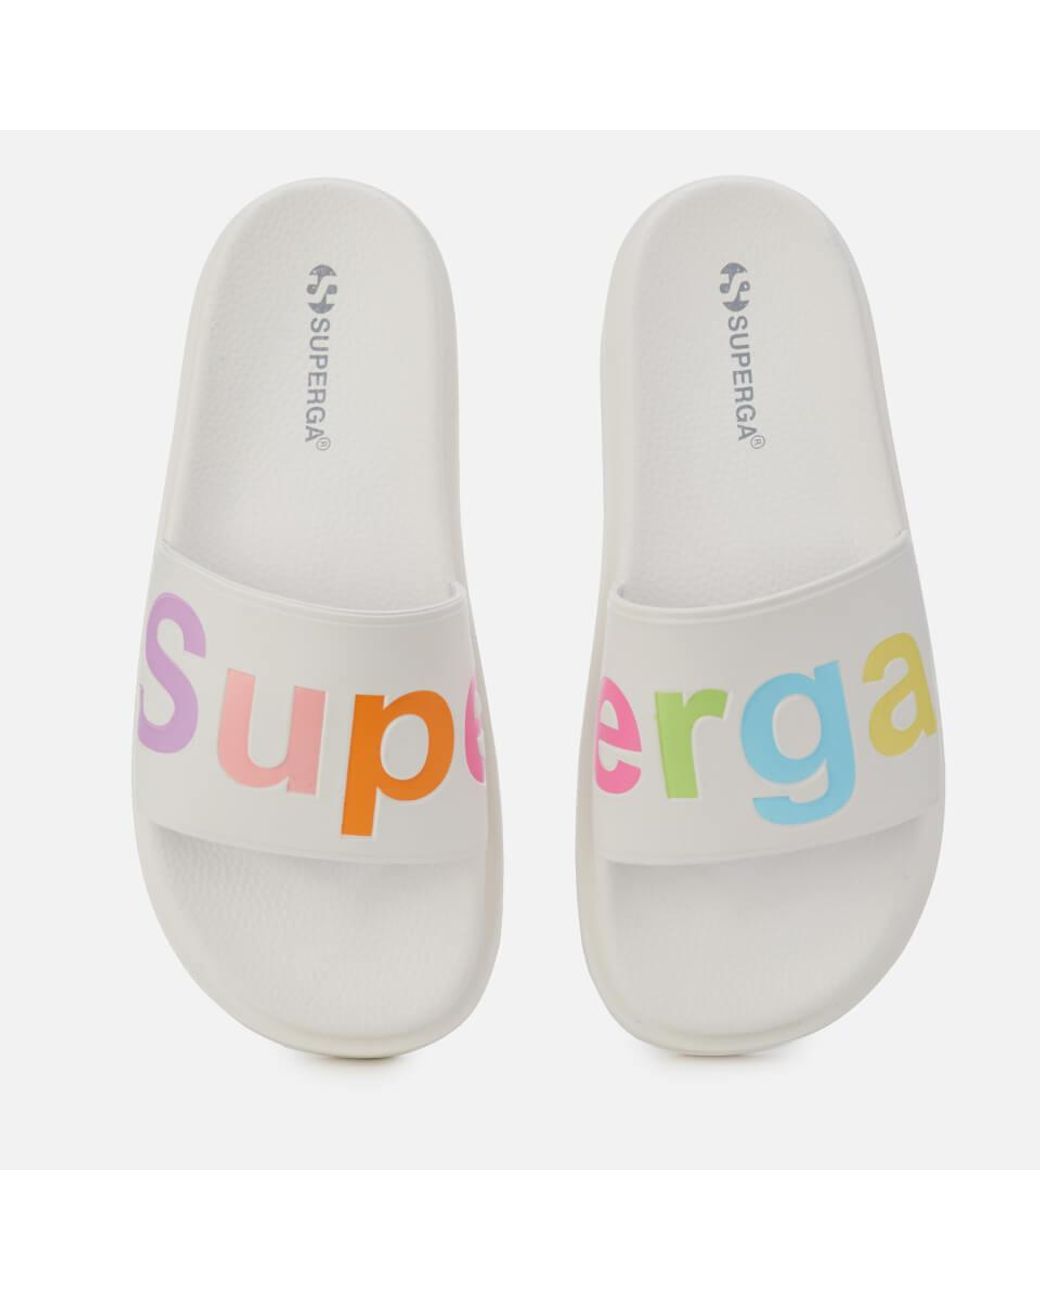 Superga 1919 Puw Slide Sandals in White | Lyst Australia